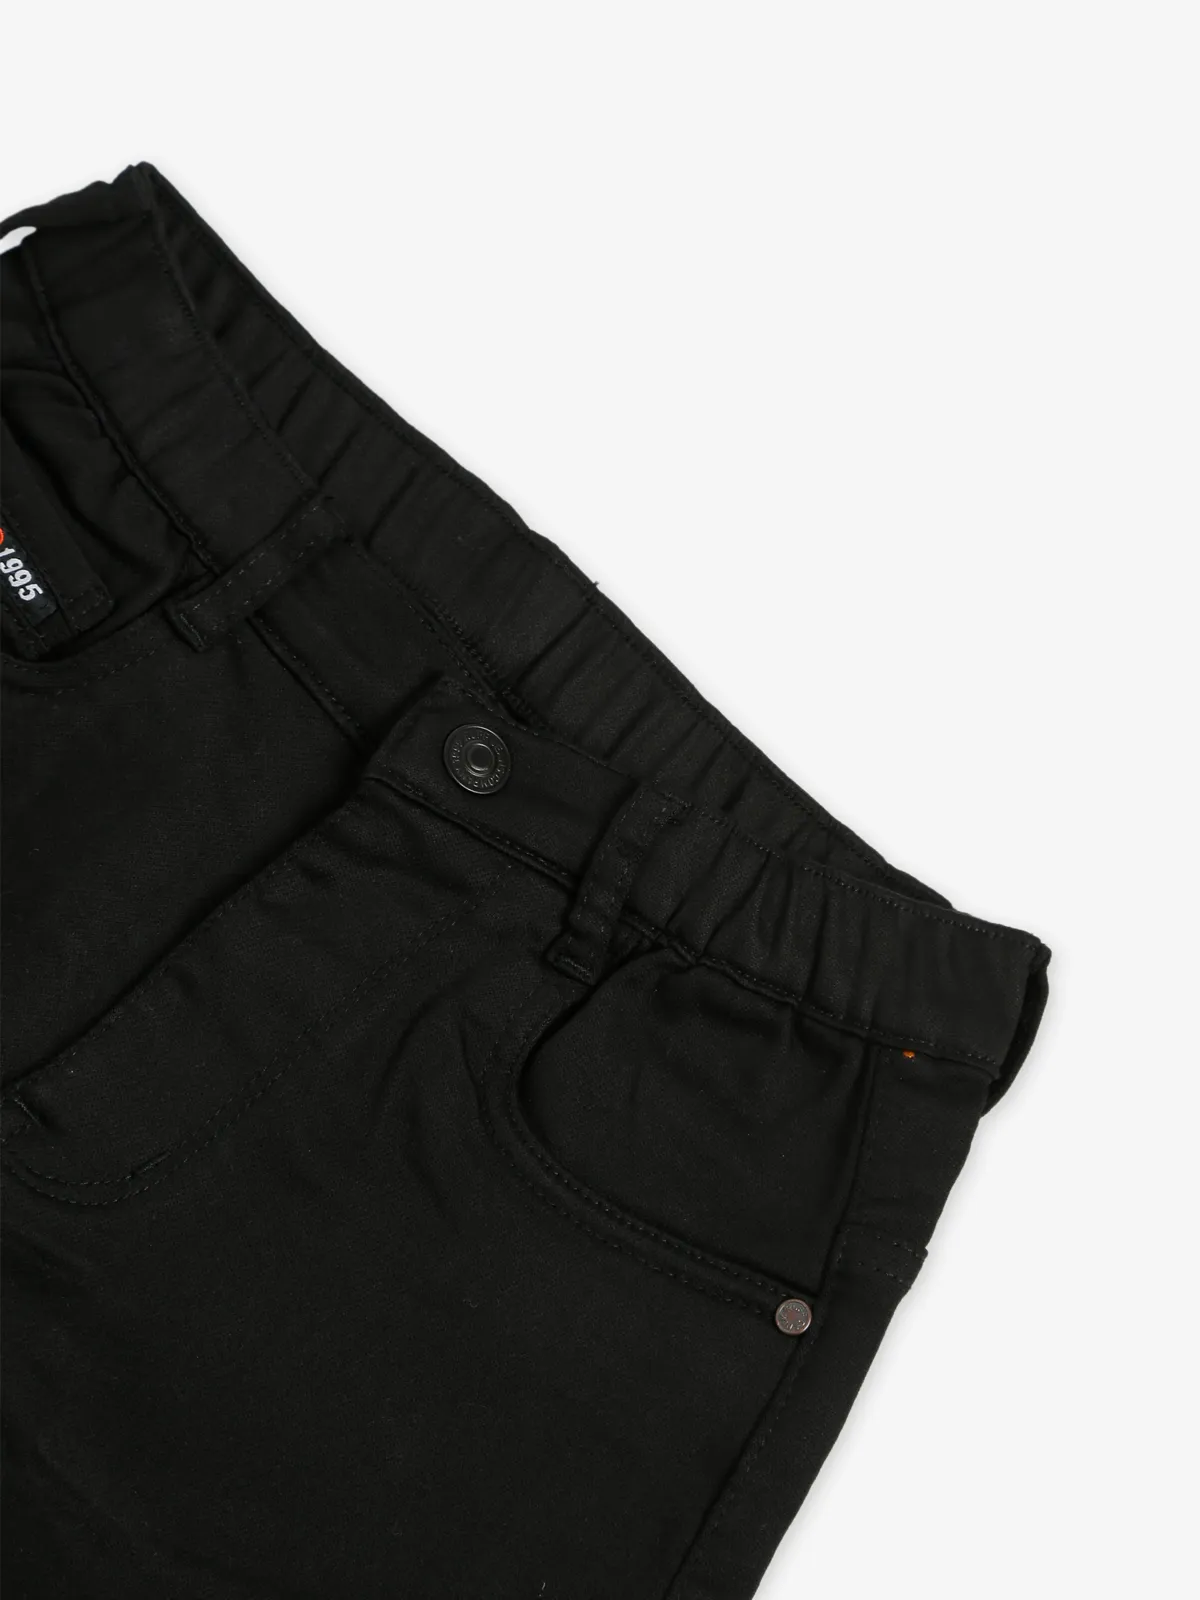 Ruff black denim shorts